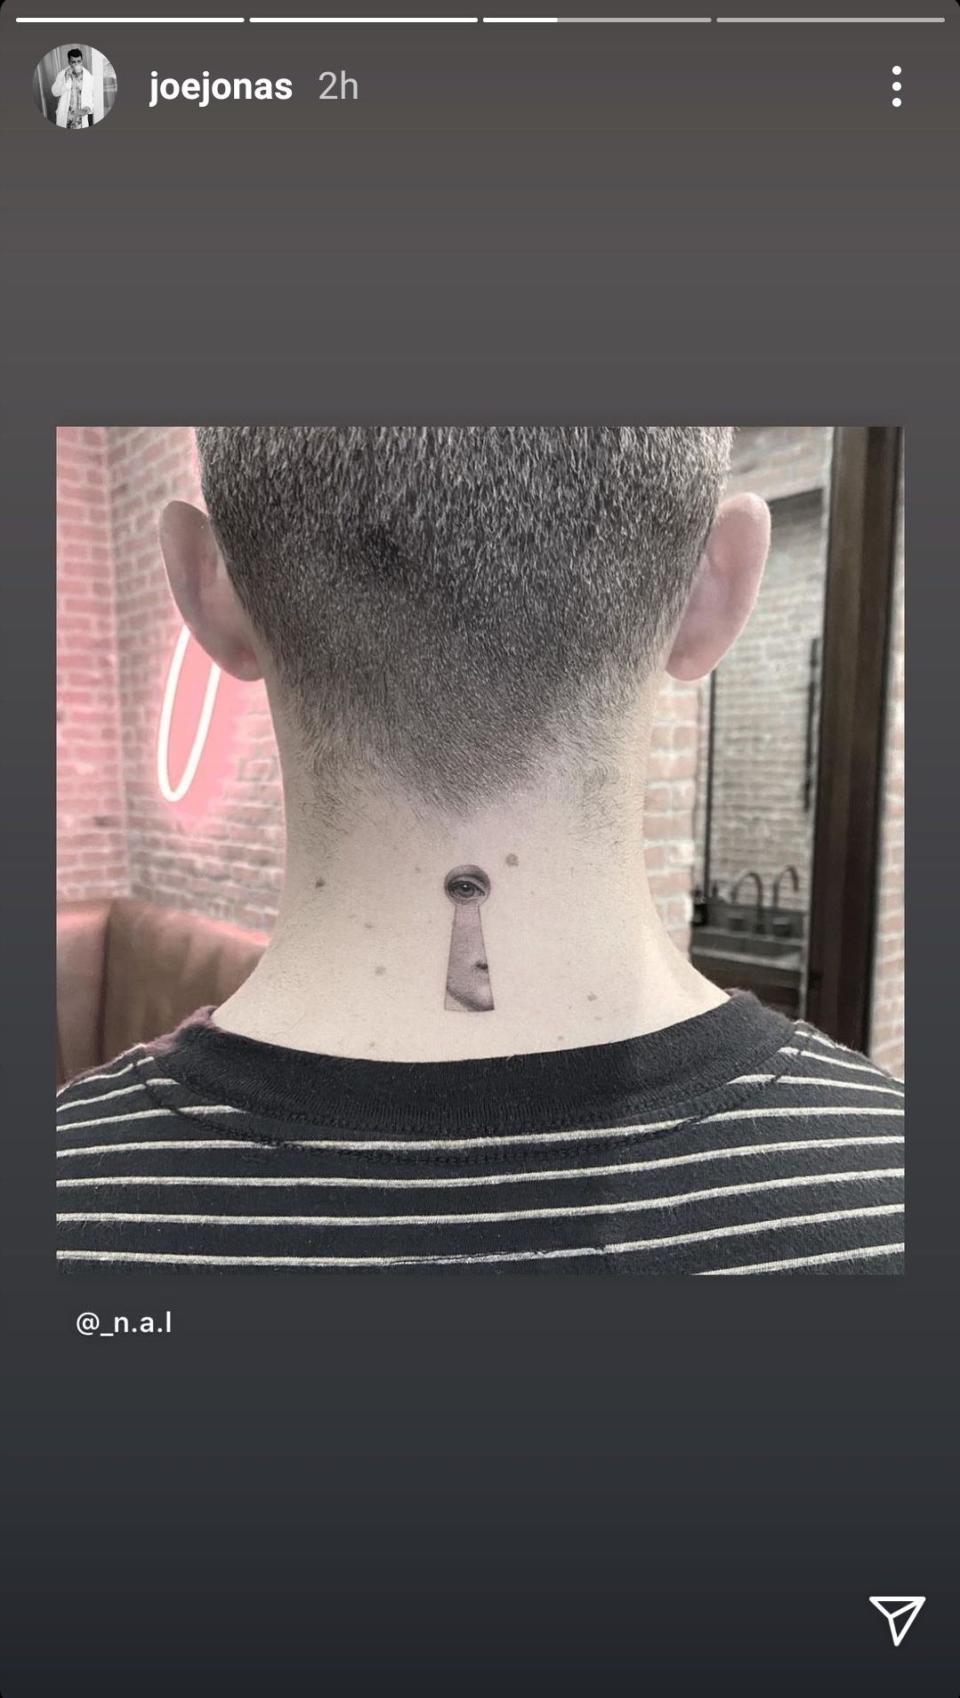 joe jonas neck tattoo october 2020